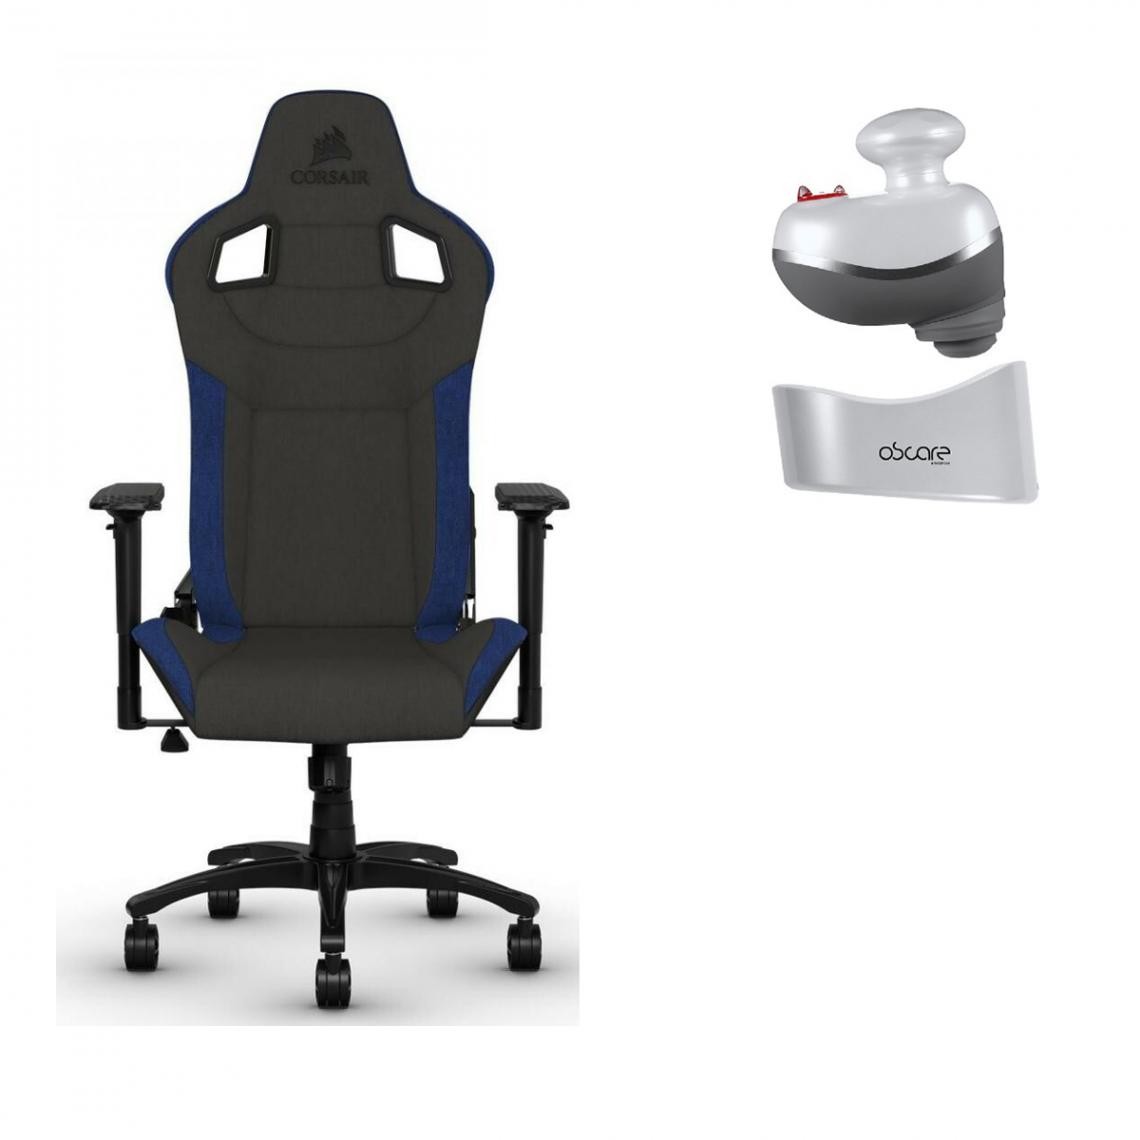 Corsair - T3 RUSH Fabric Gaming Chair - Blue/Black + Appareil de massage par percussion GM001 OFFERT - Chaise gamer